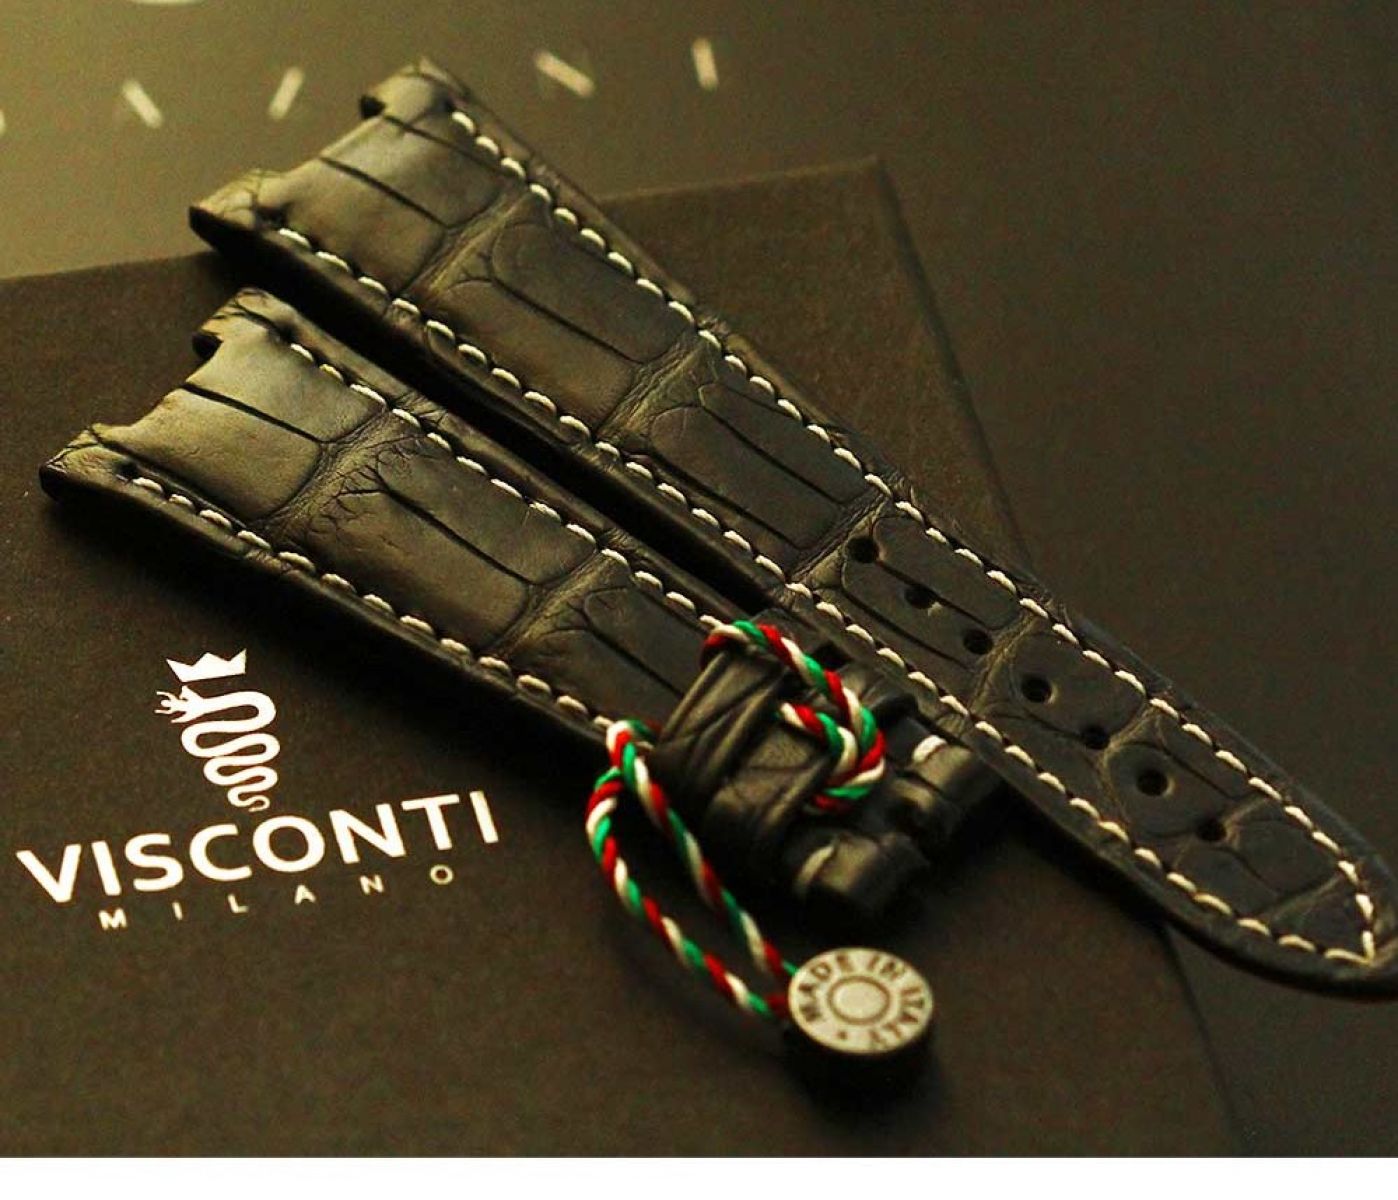 Patek Philippe Nautilus style watch strap 25mm in Black matte Alligator leather. White stitching